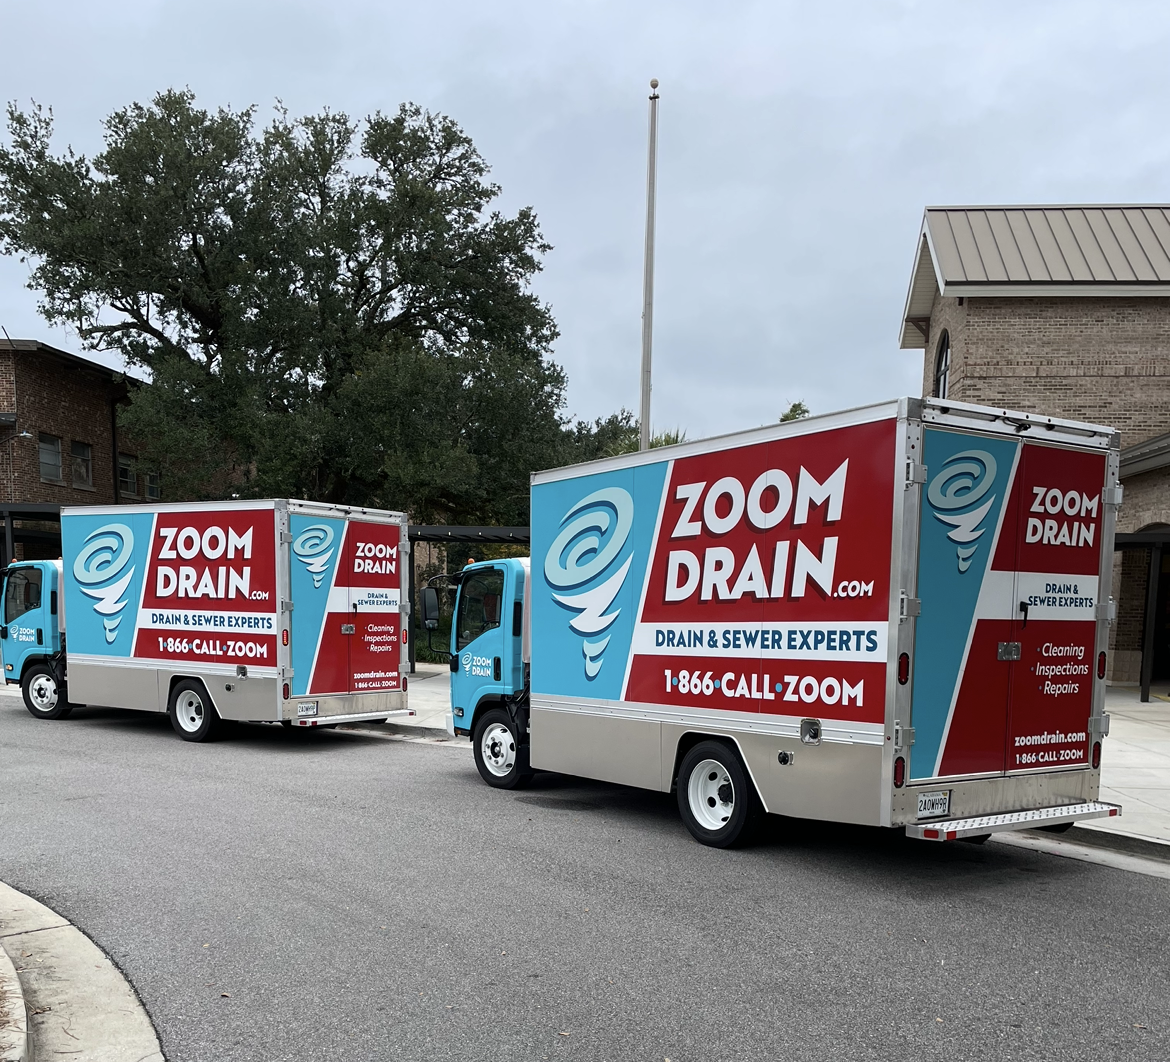 Image of the Zoom Drain Trucks